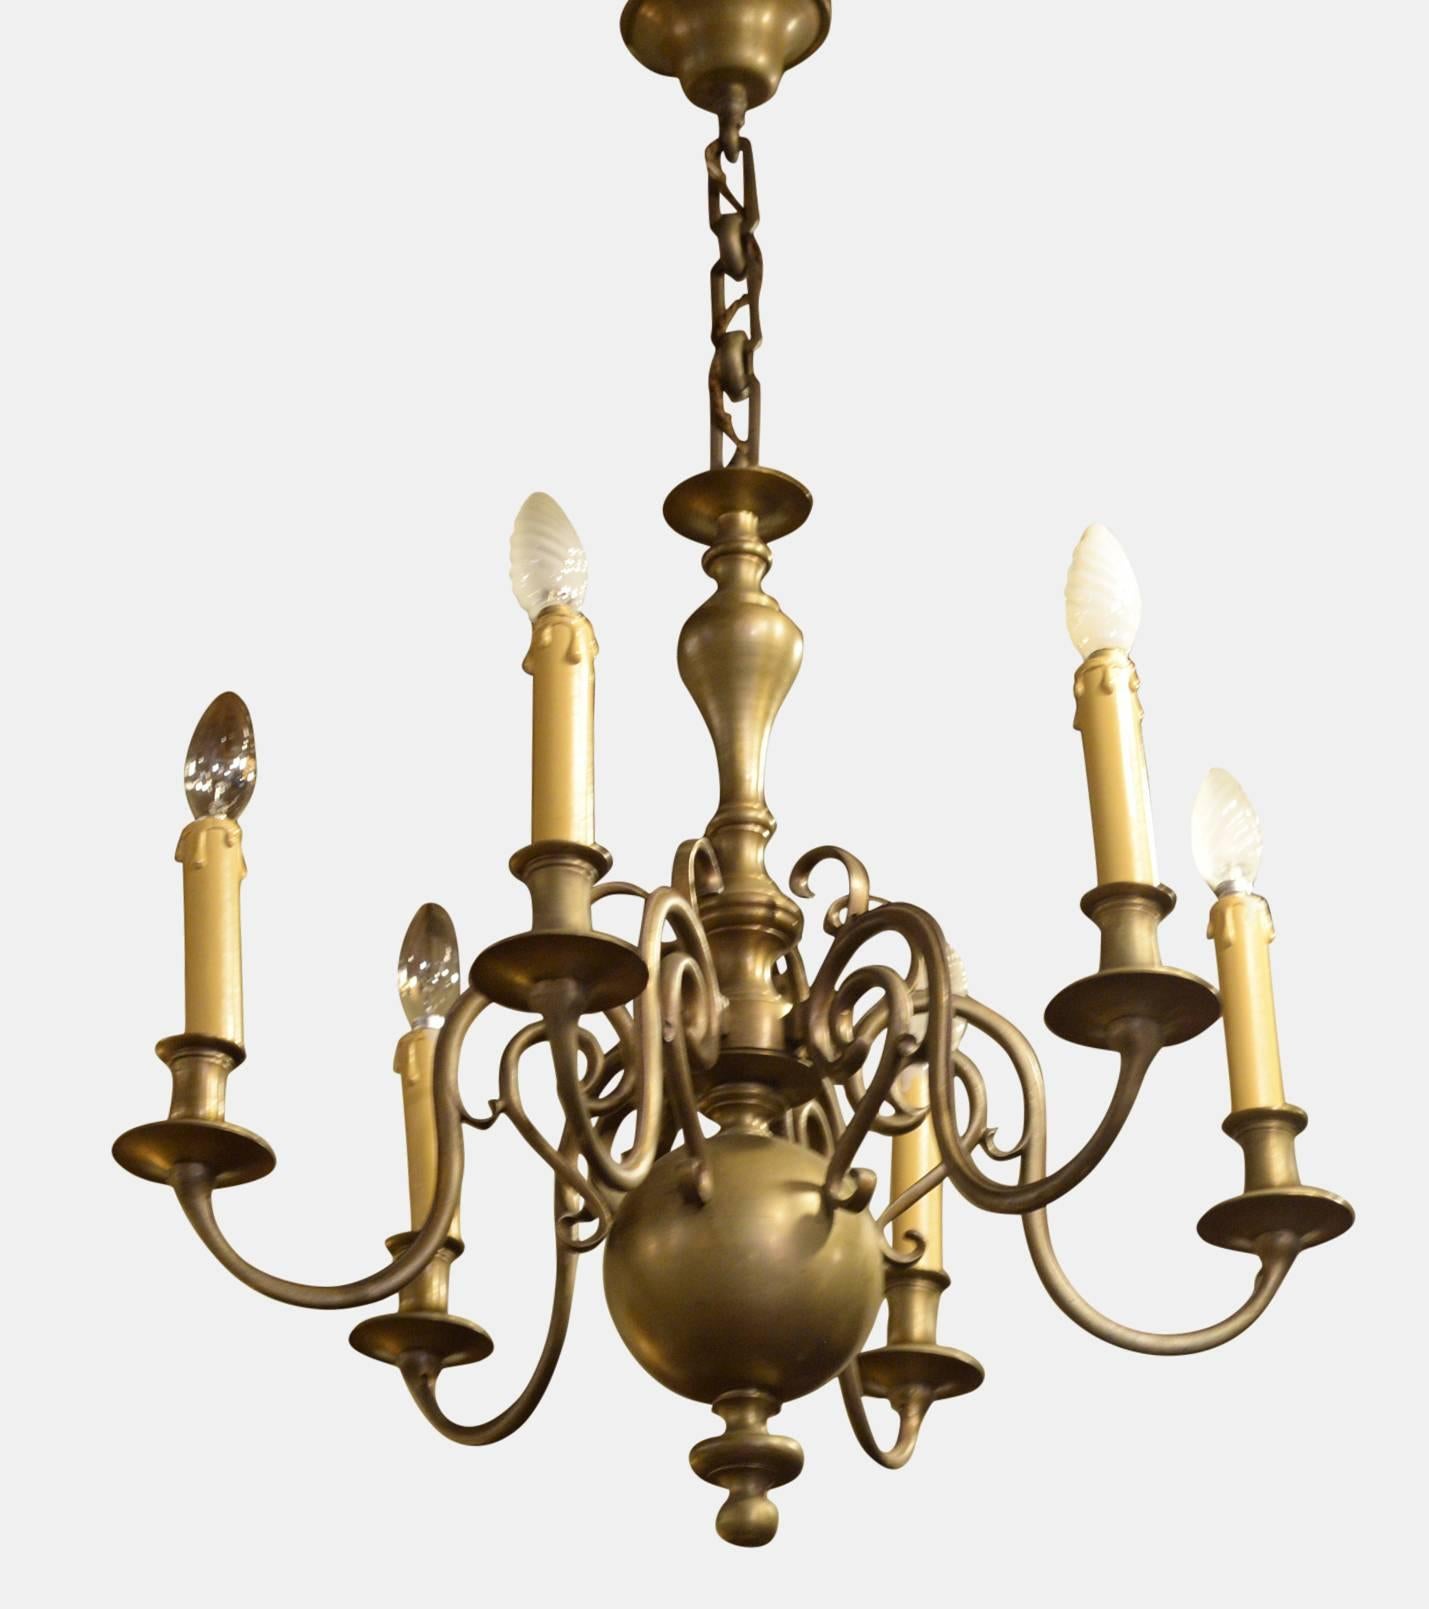 A heavy quality Dutch brass six branch chandelier,

circa 1920.